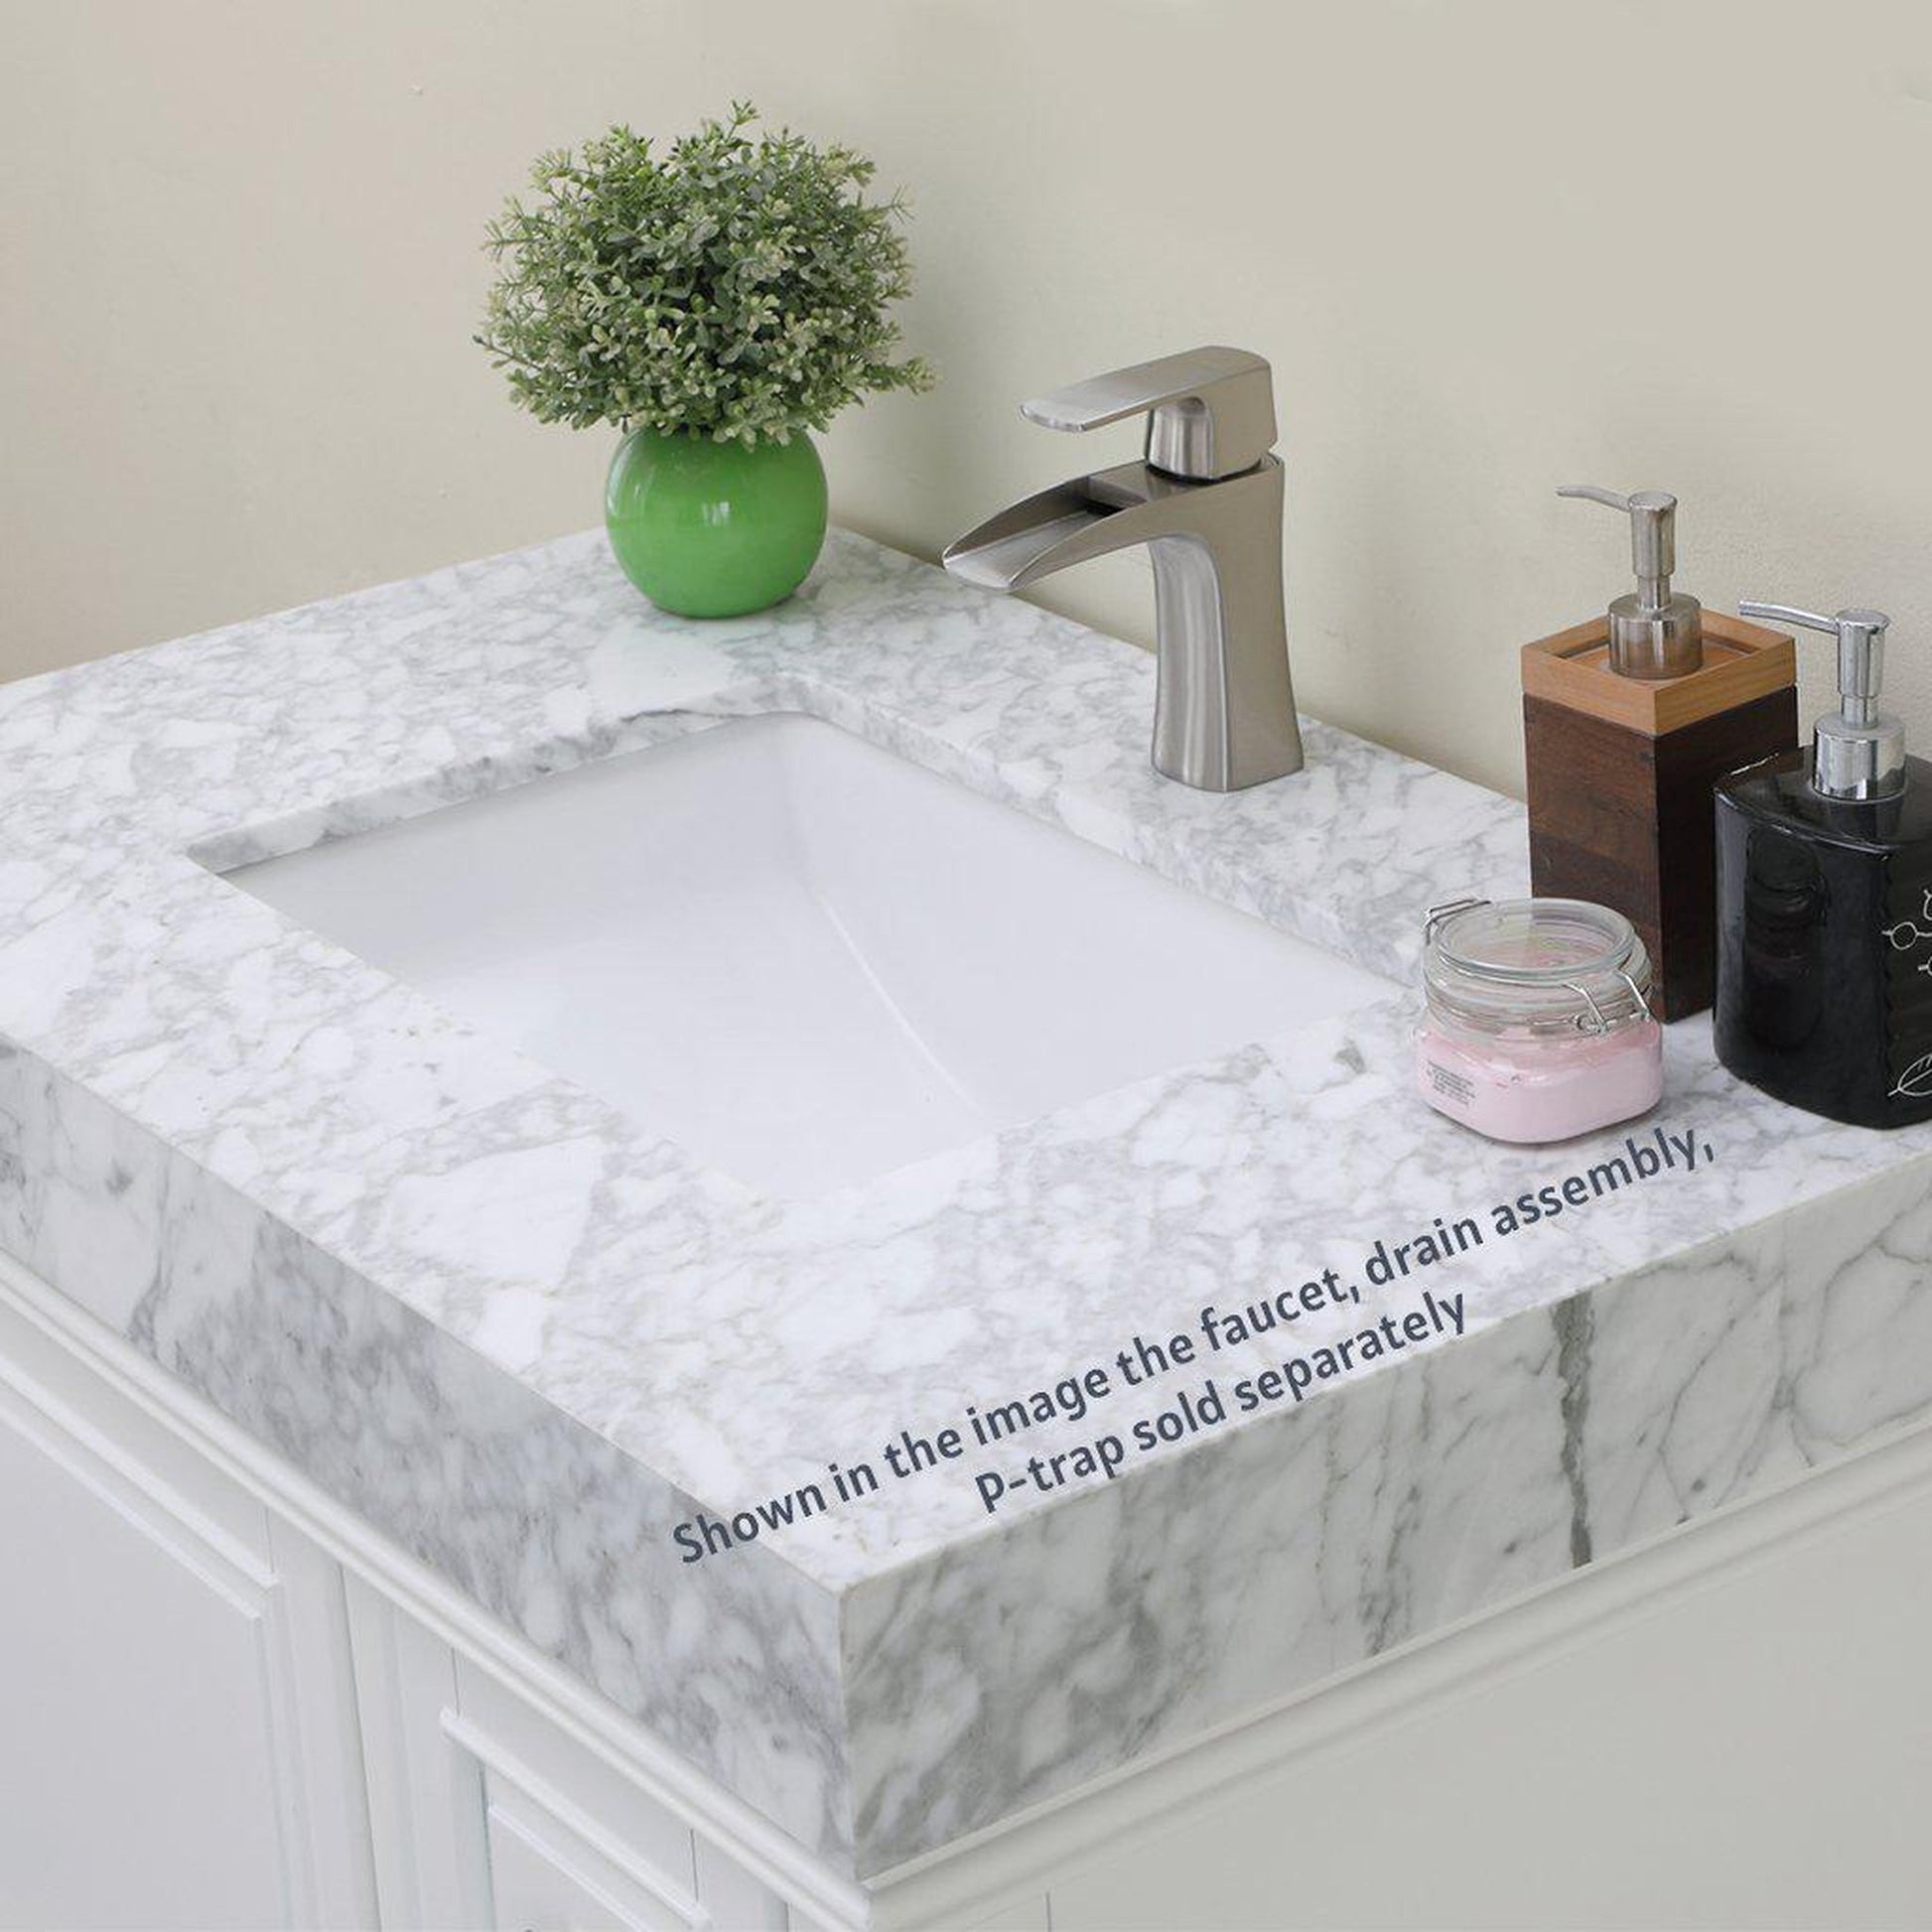 Altair Jardin 36" Single White Freestanding Bathroom Vanity Set With Natural Carrara White Marble Top, Rectangular Undermount Ceramic Sink, and Overflow